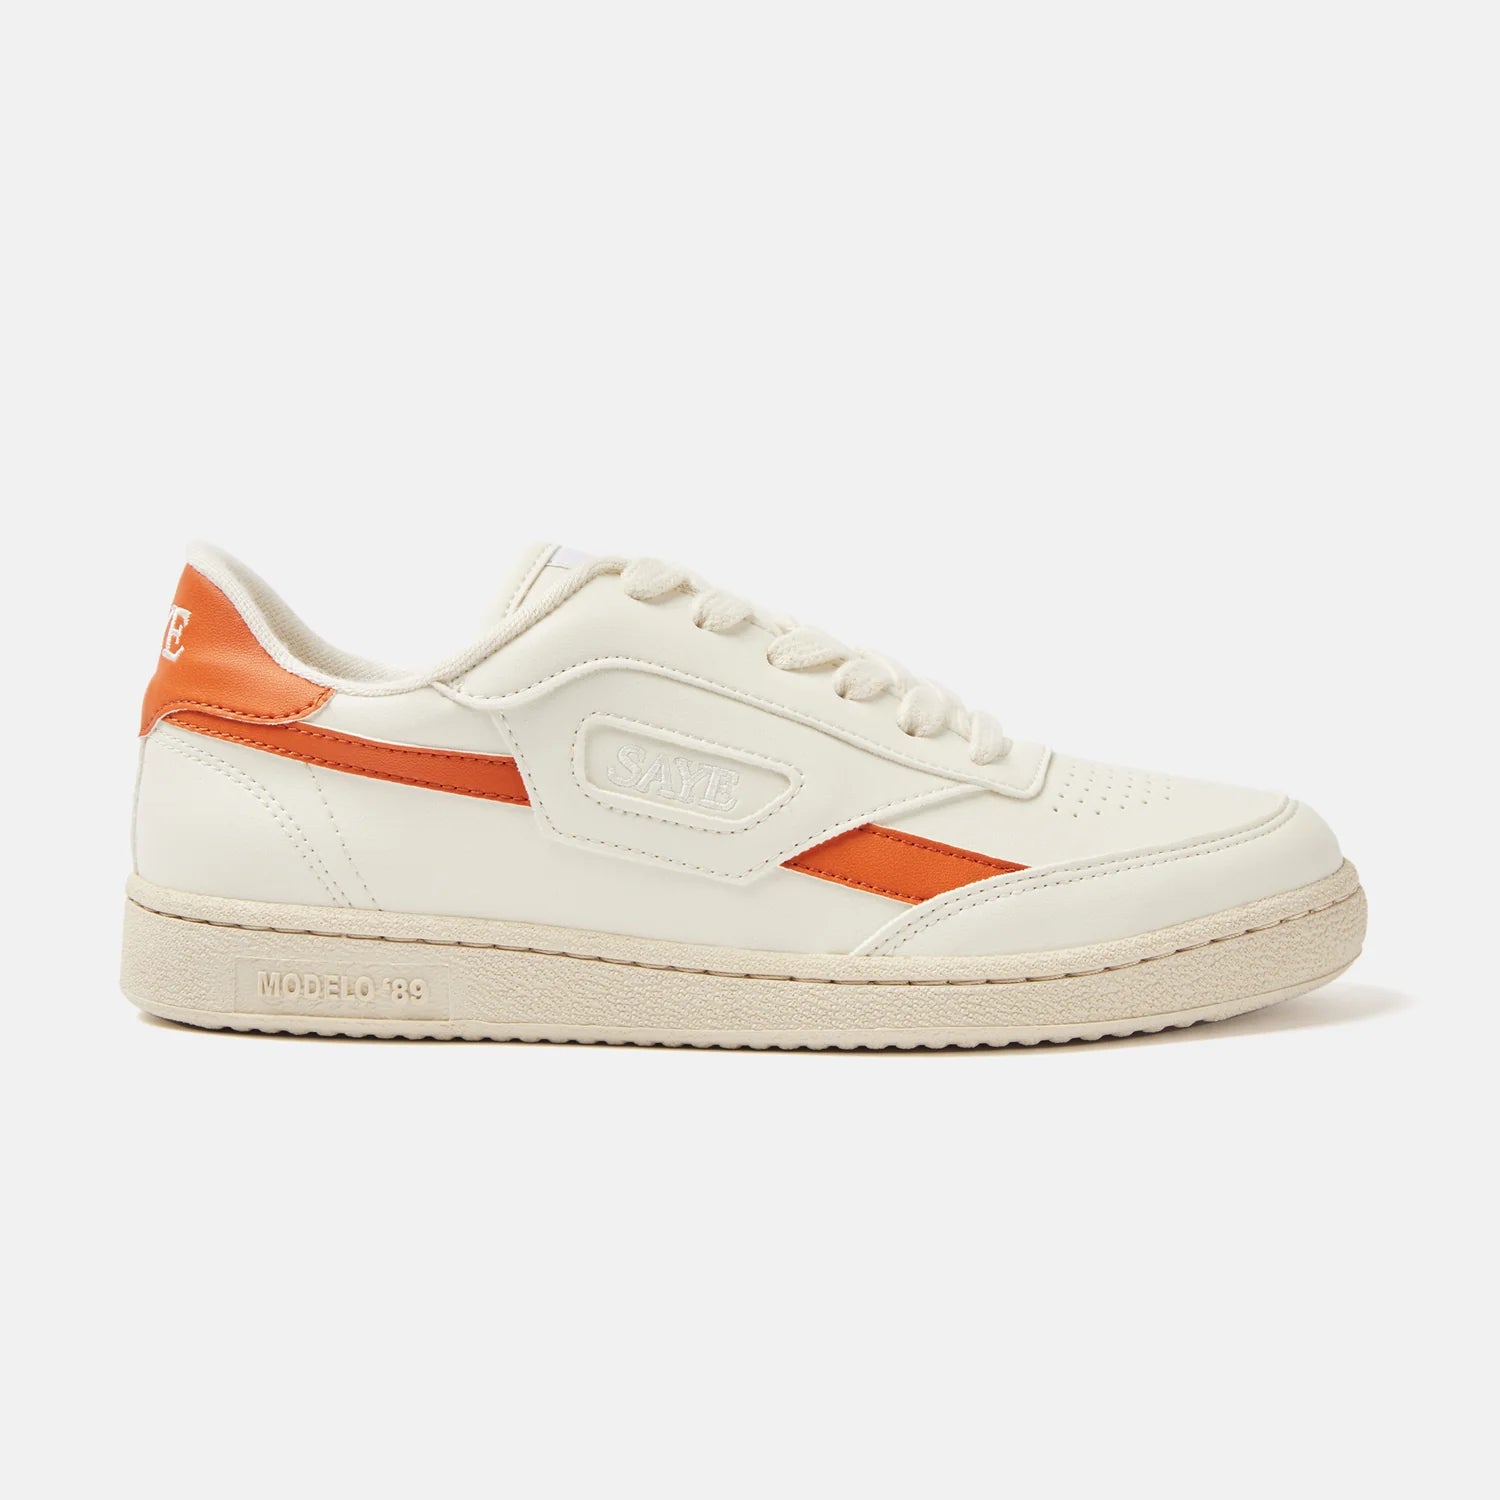 Modelo '89 Sneakers - Orange